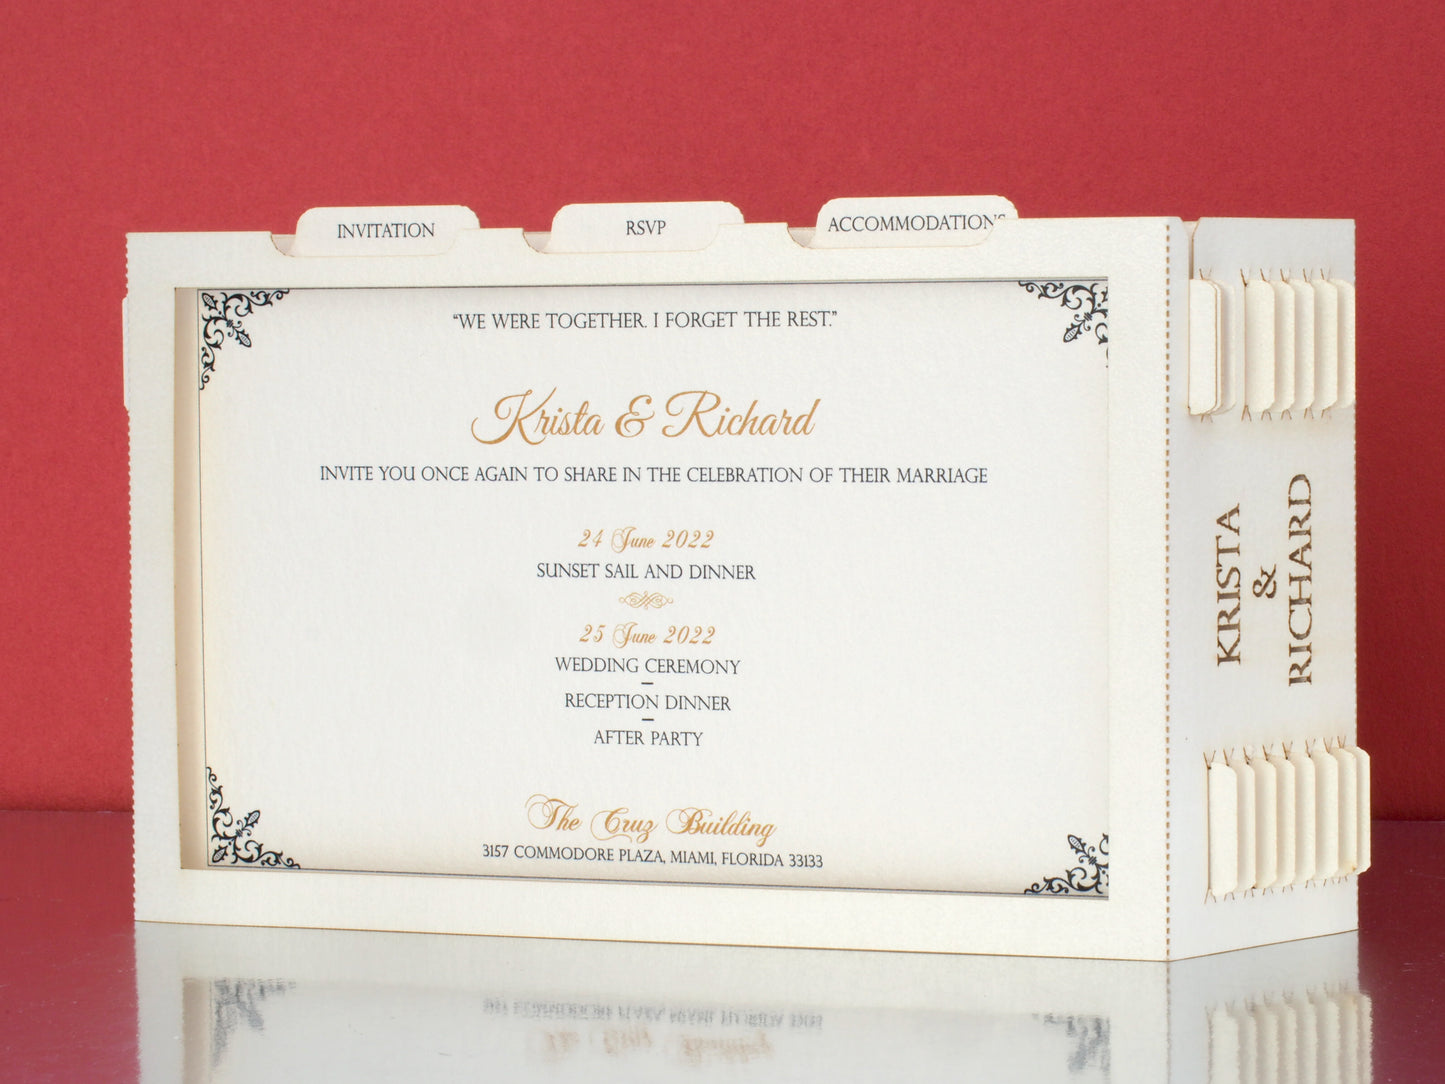 Miami Florida Commodore Plaza. Wedding invitation pop up box folded card. The Cruz Building.